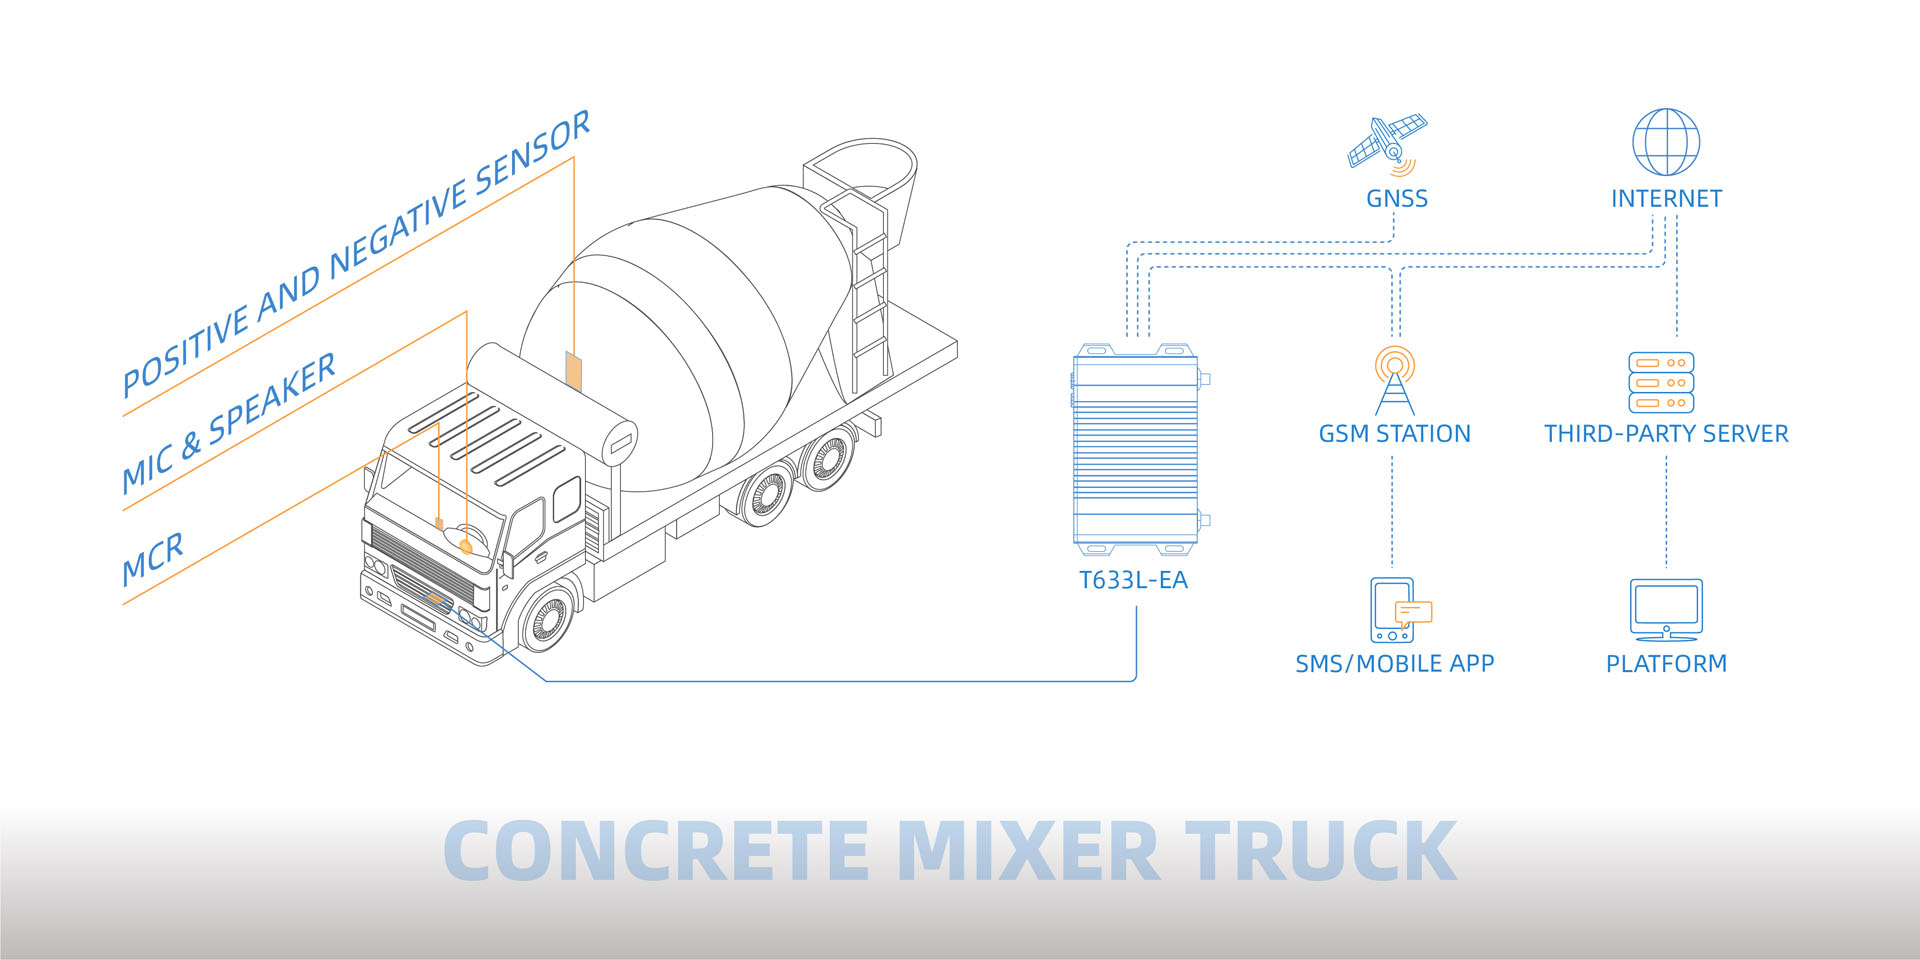 4concrete-mixed-truck